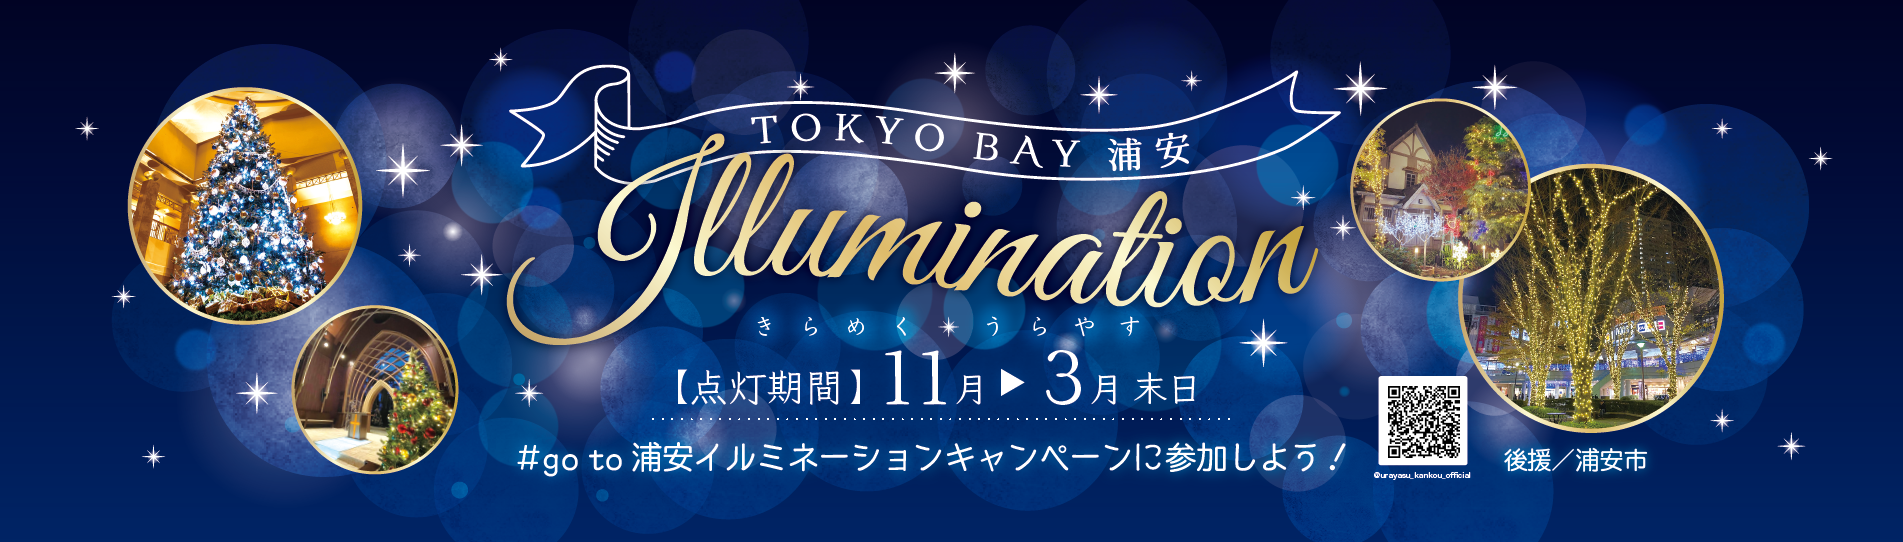 TOKYO BAY 浦安 Illumination